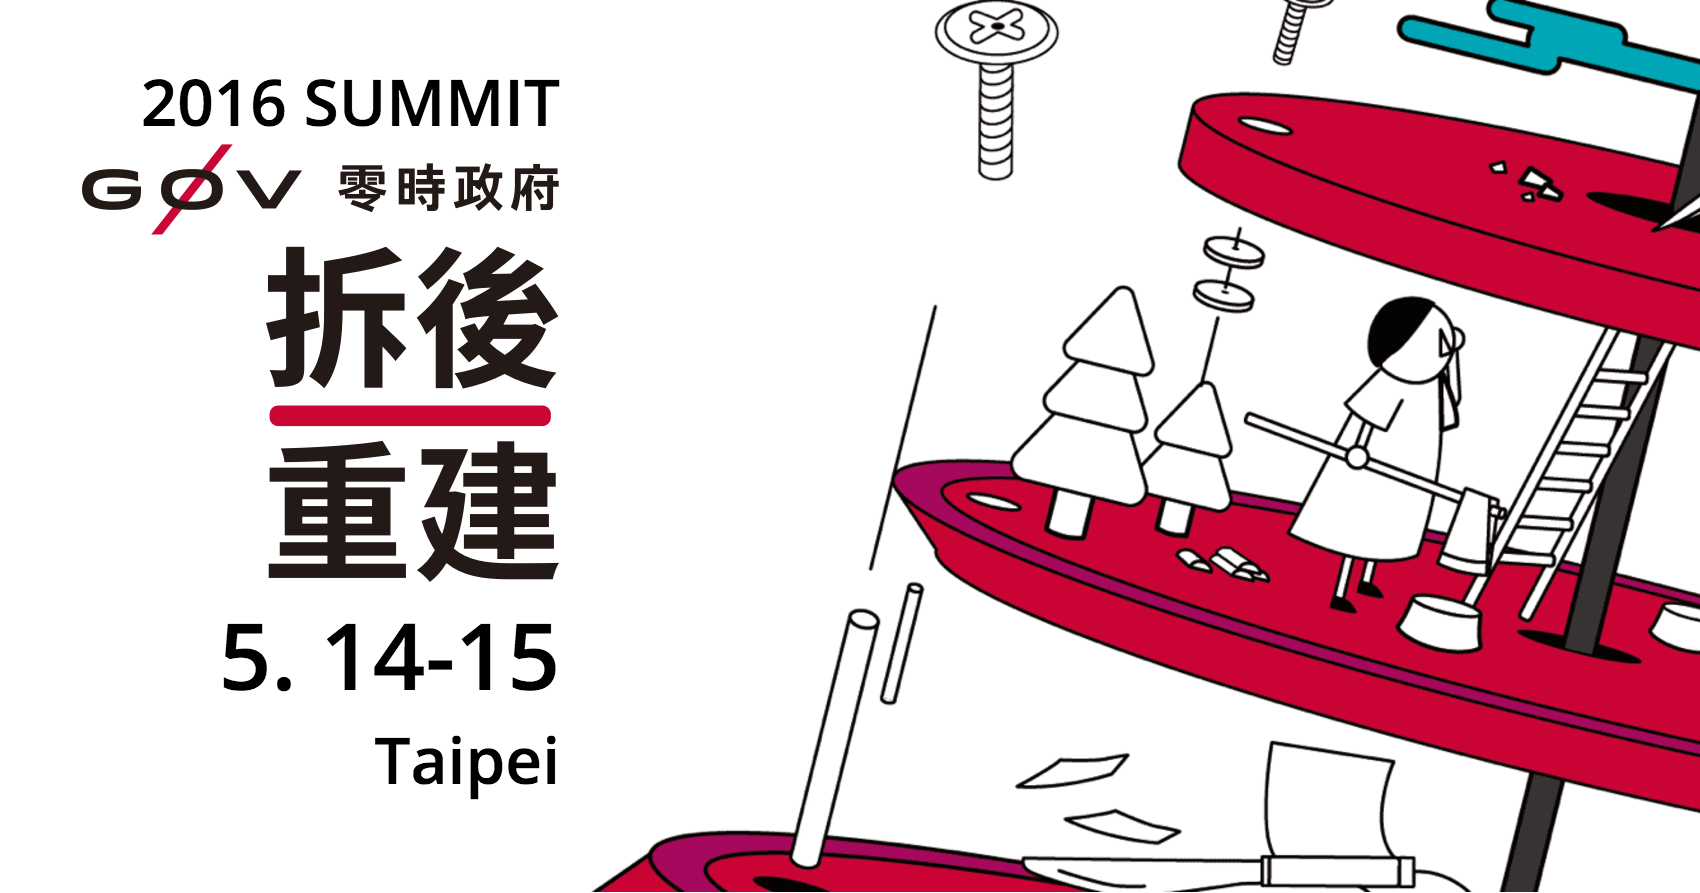 Event cover image for G0V Summit 零時政府高峰會 2016